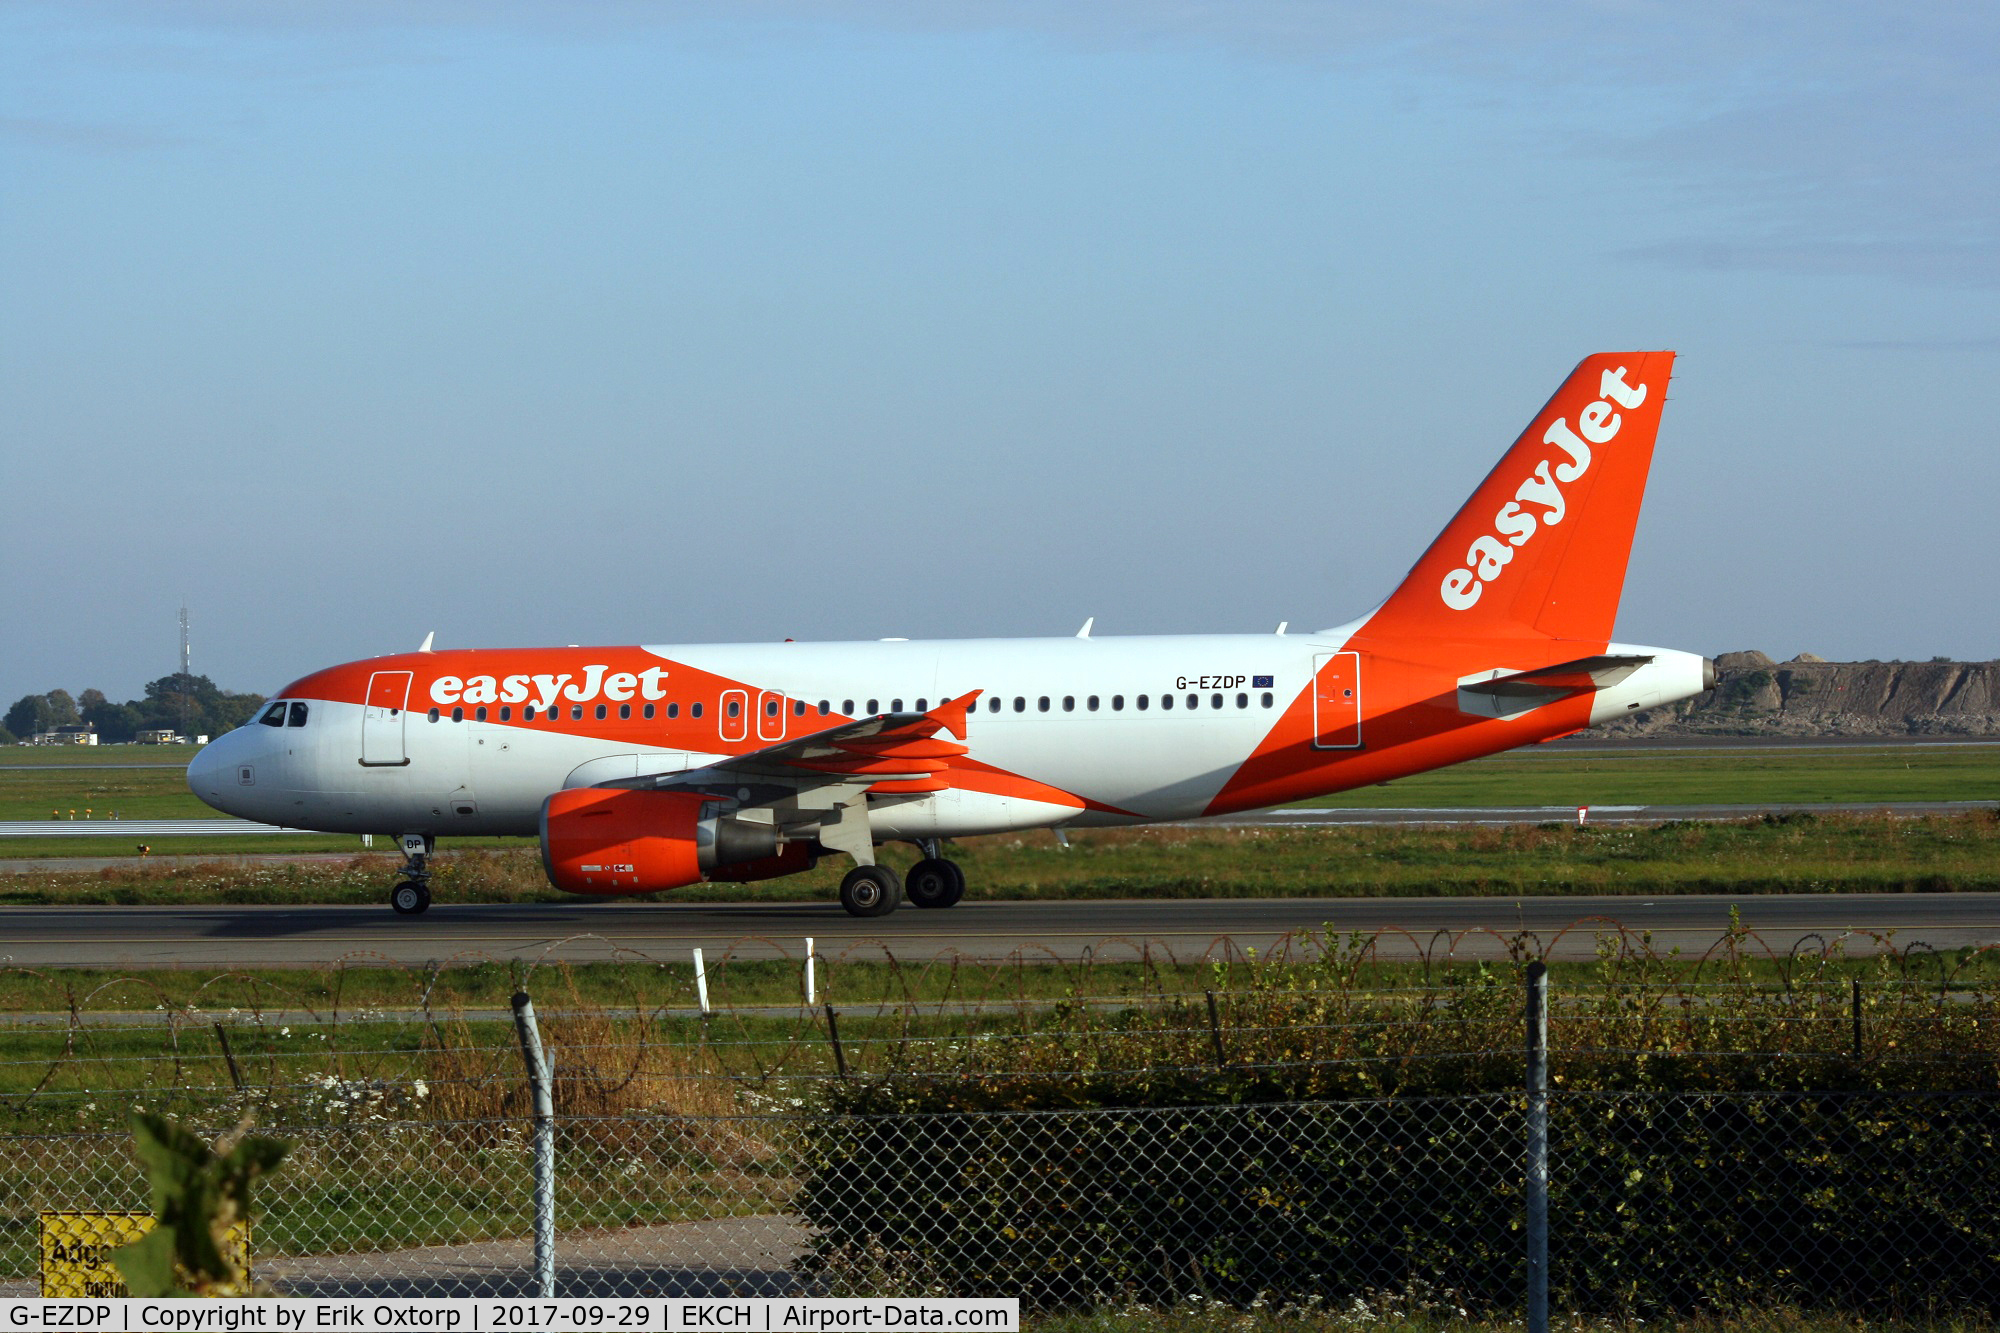 G-EZDP, 2008 Airbus A319-111 C/N 3675, G-EZDP landed rw 04L